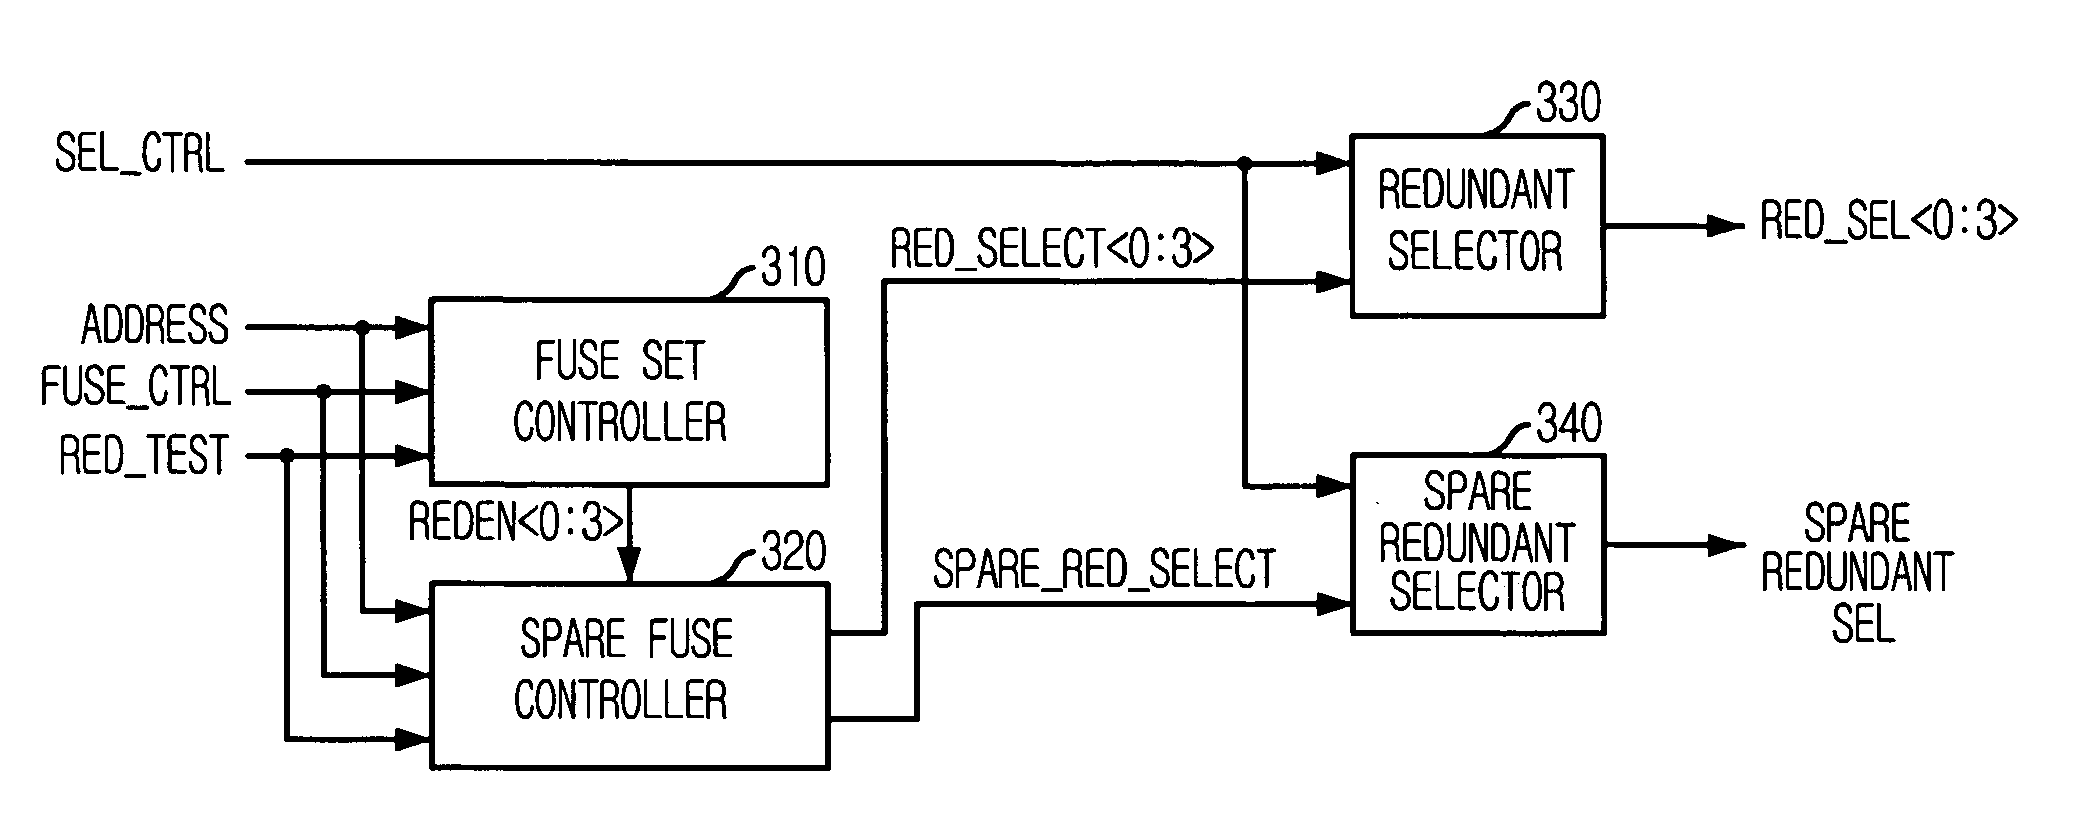 Redundancy circuit in semiconductor memory device